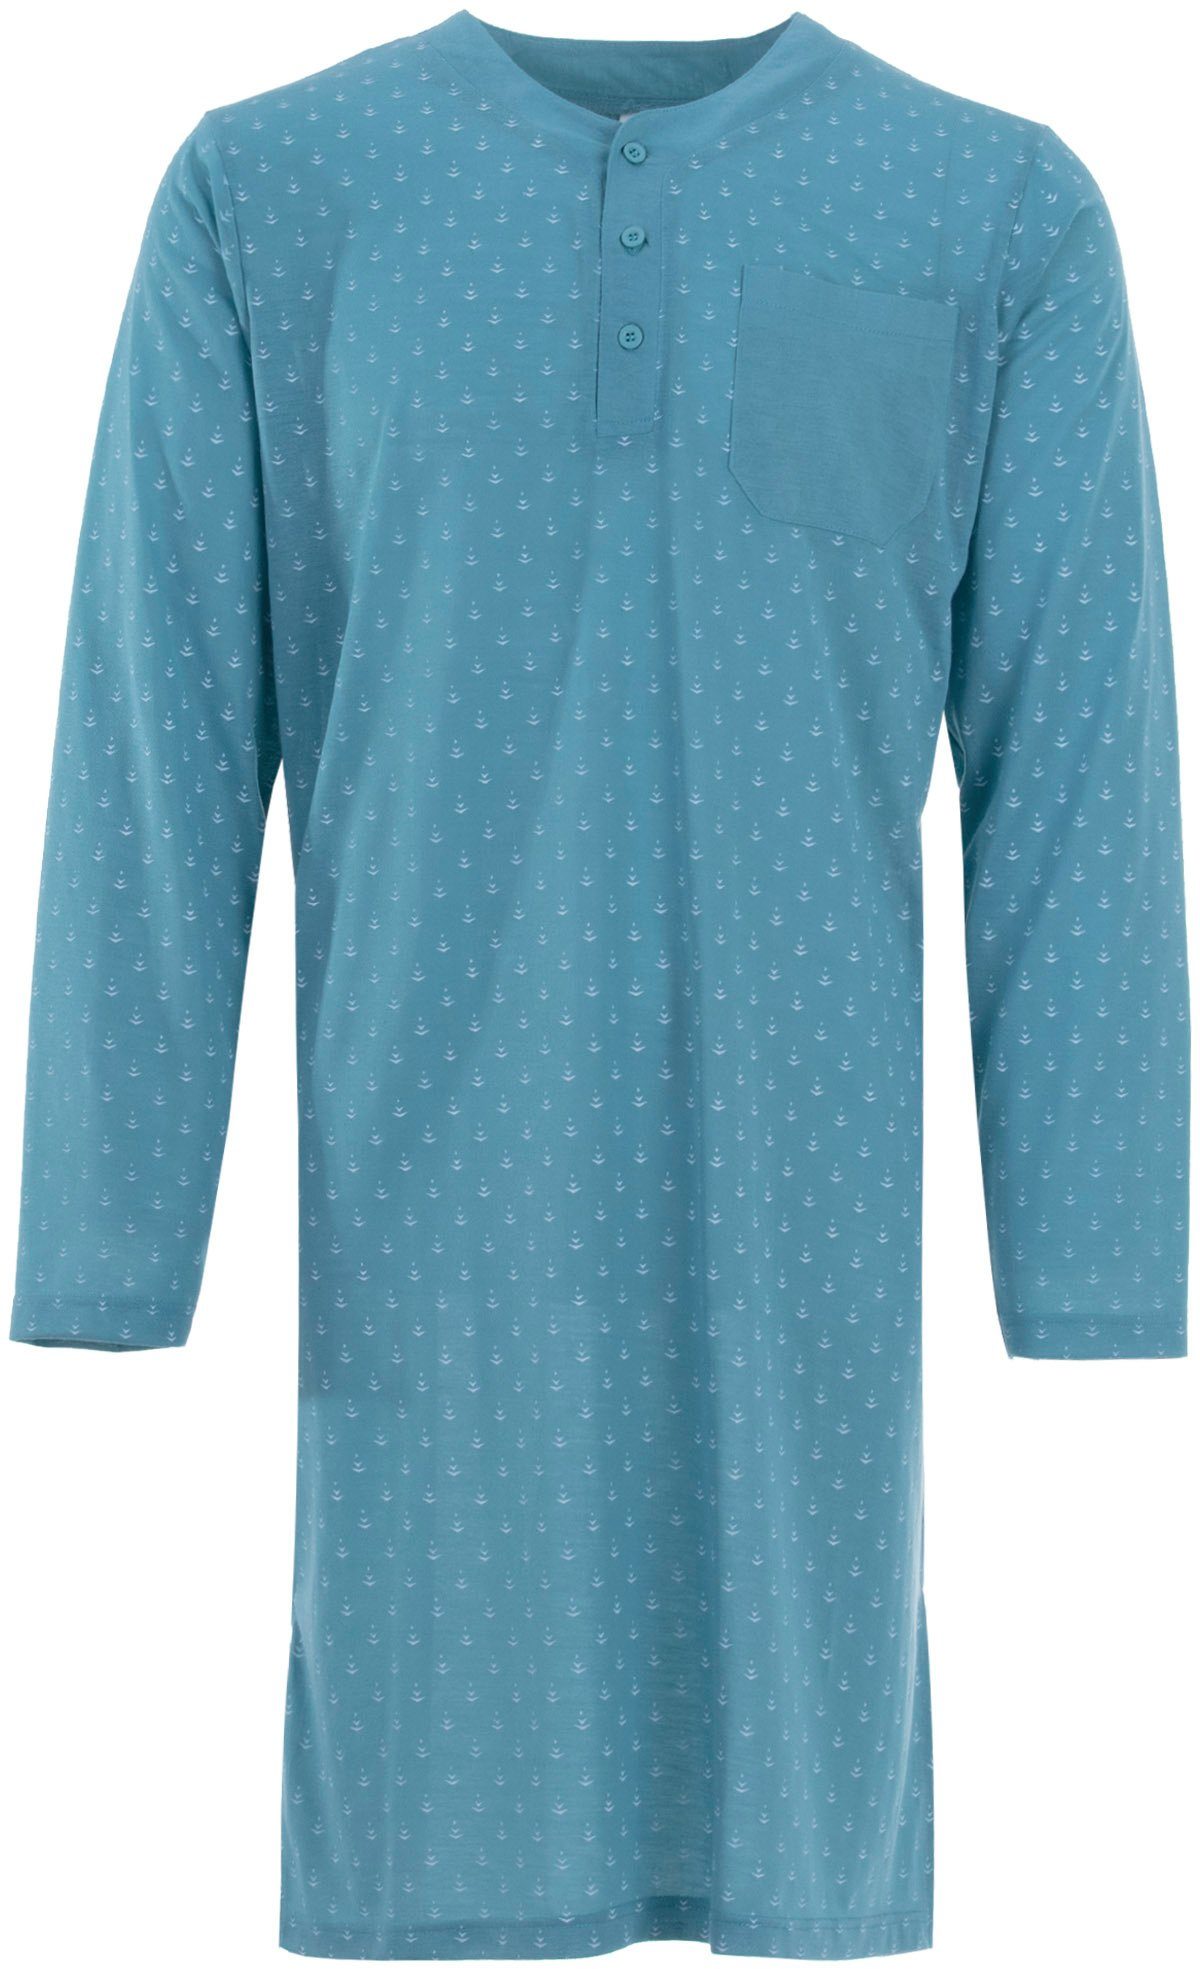 Lucky Nachthemd Nachthemd Langarm - Pfeil V- Ausschnitt mit Knopfleiste petrol